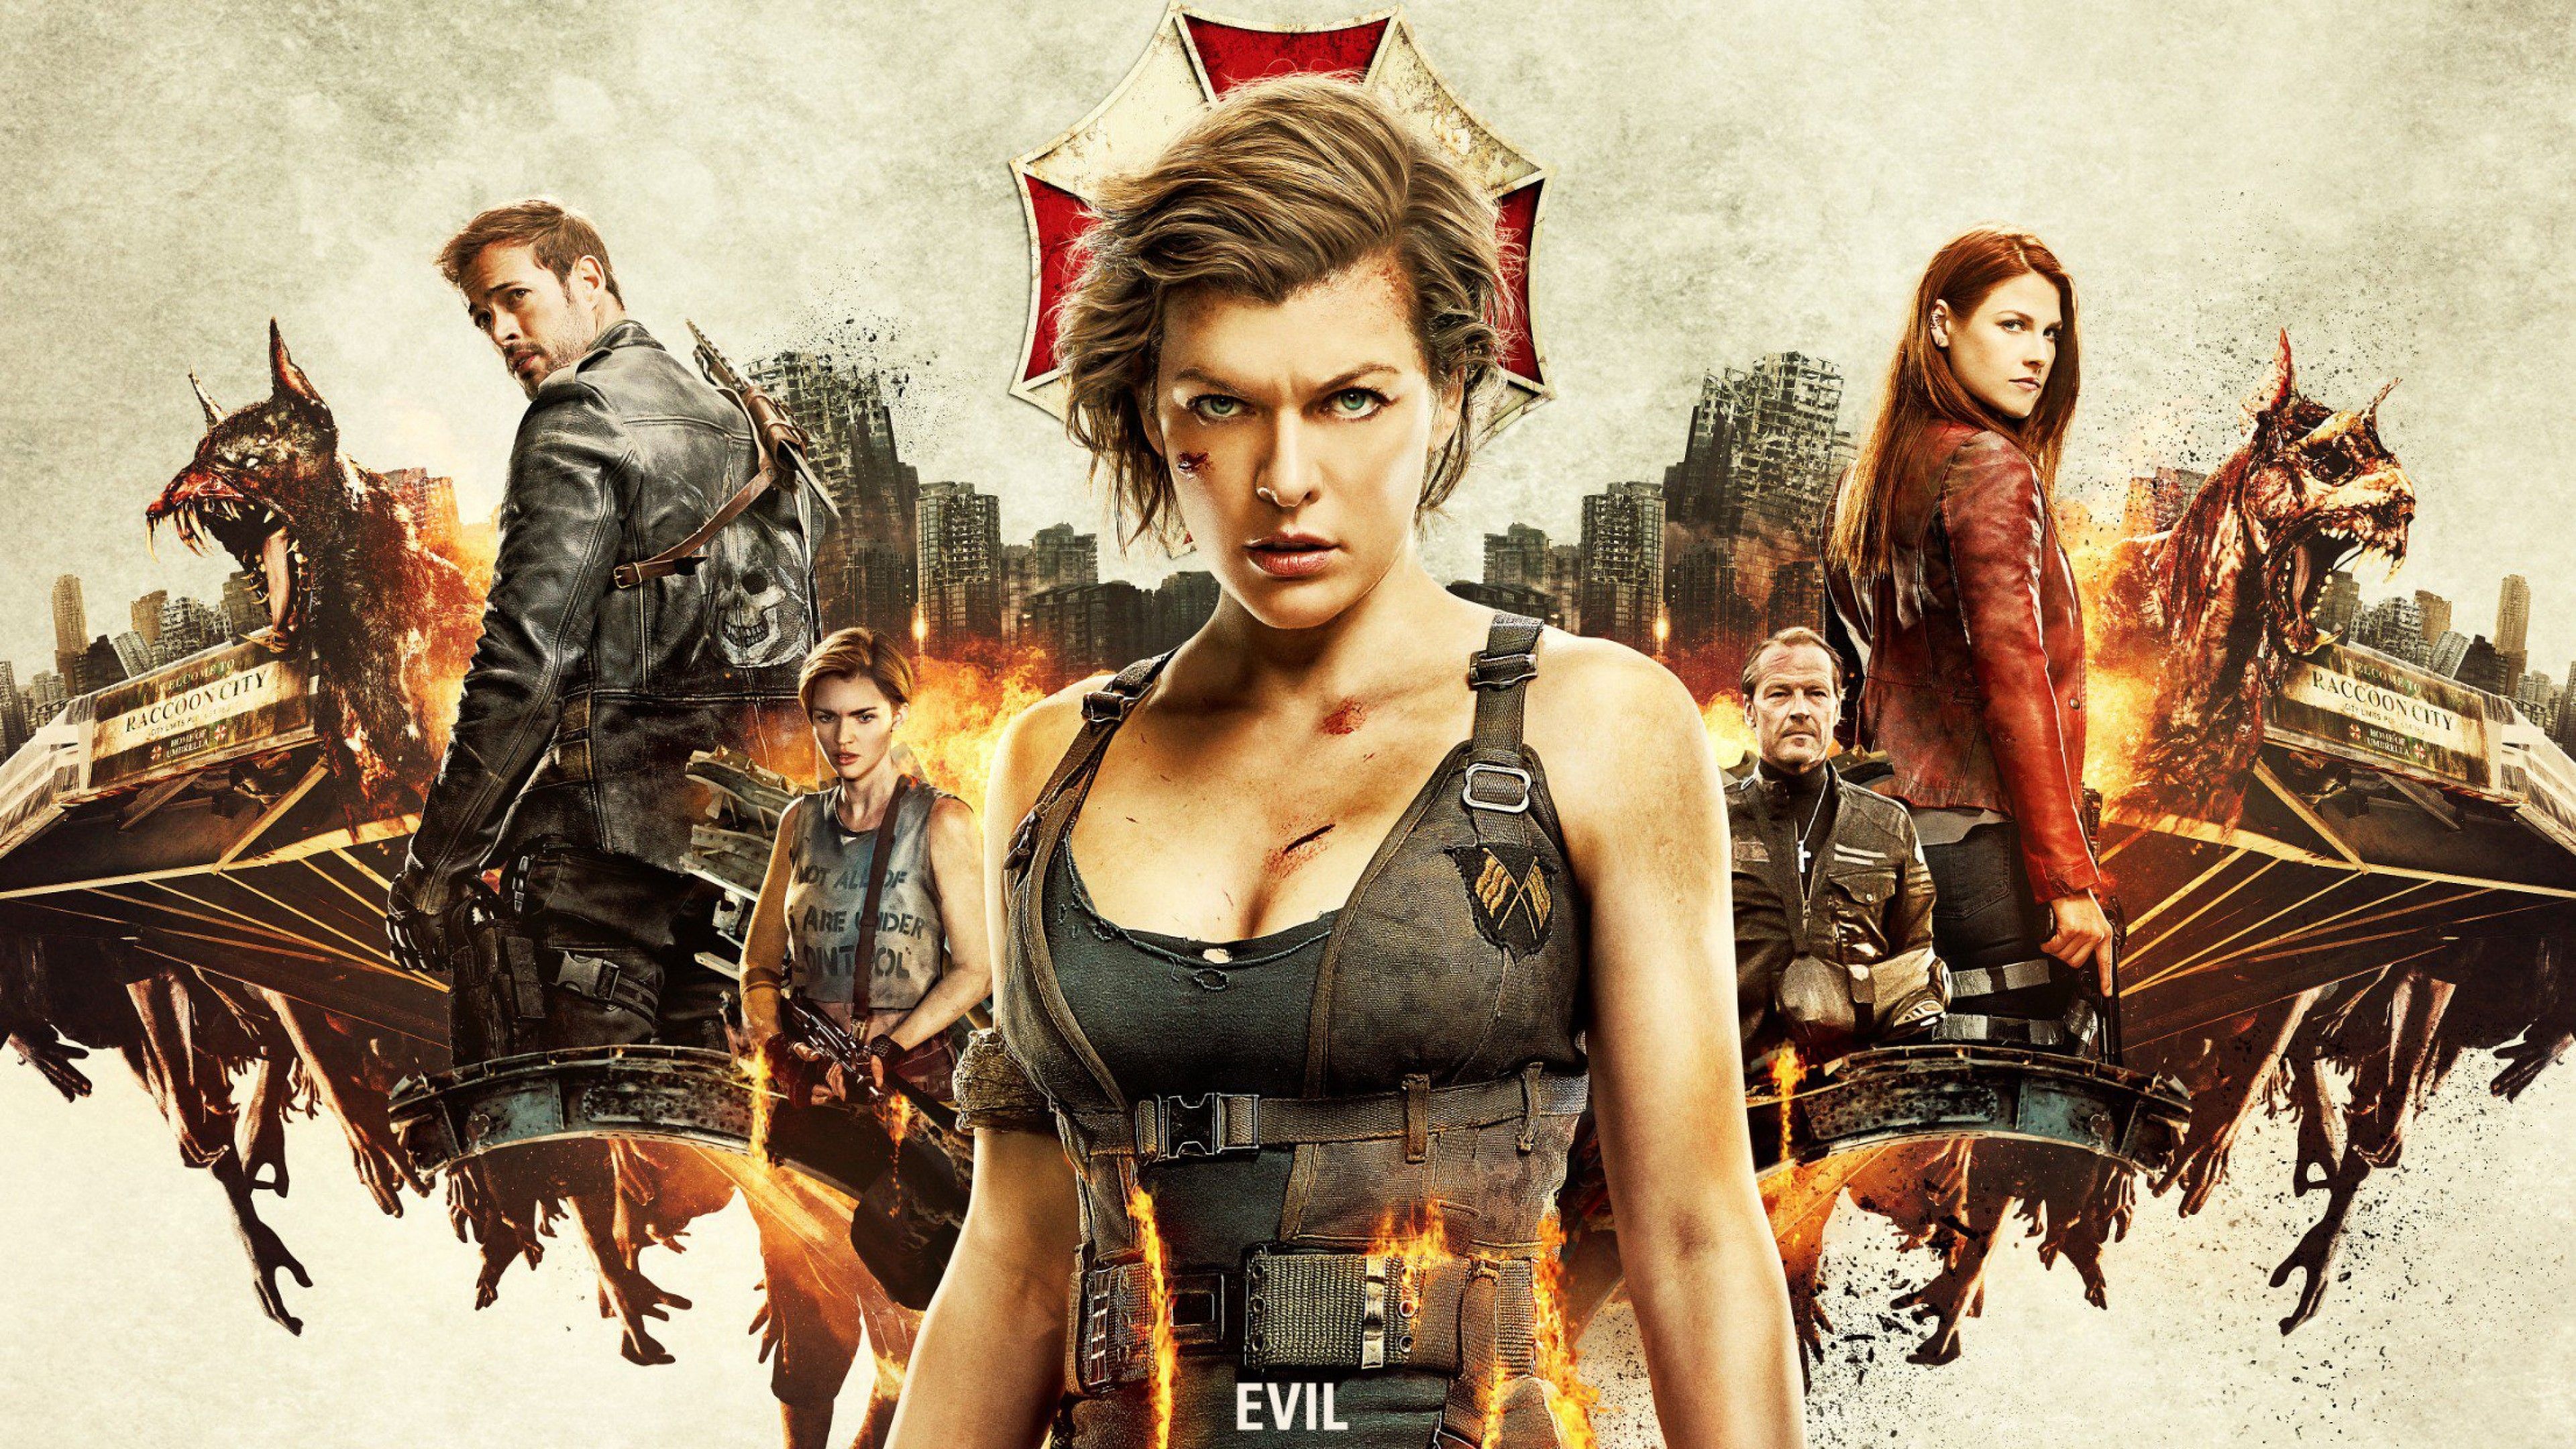 Resident Evil movie wallpapers, Striking backgrounds, Intense action, Unpredictable plot, 3840x2160 4K Desktop